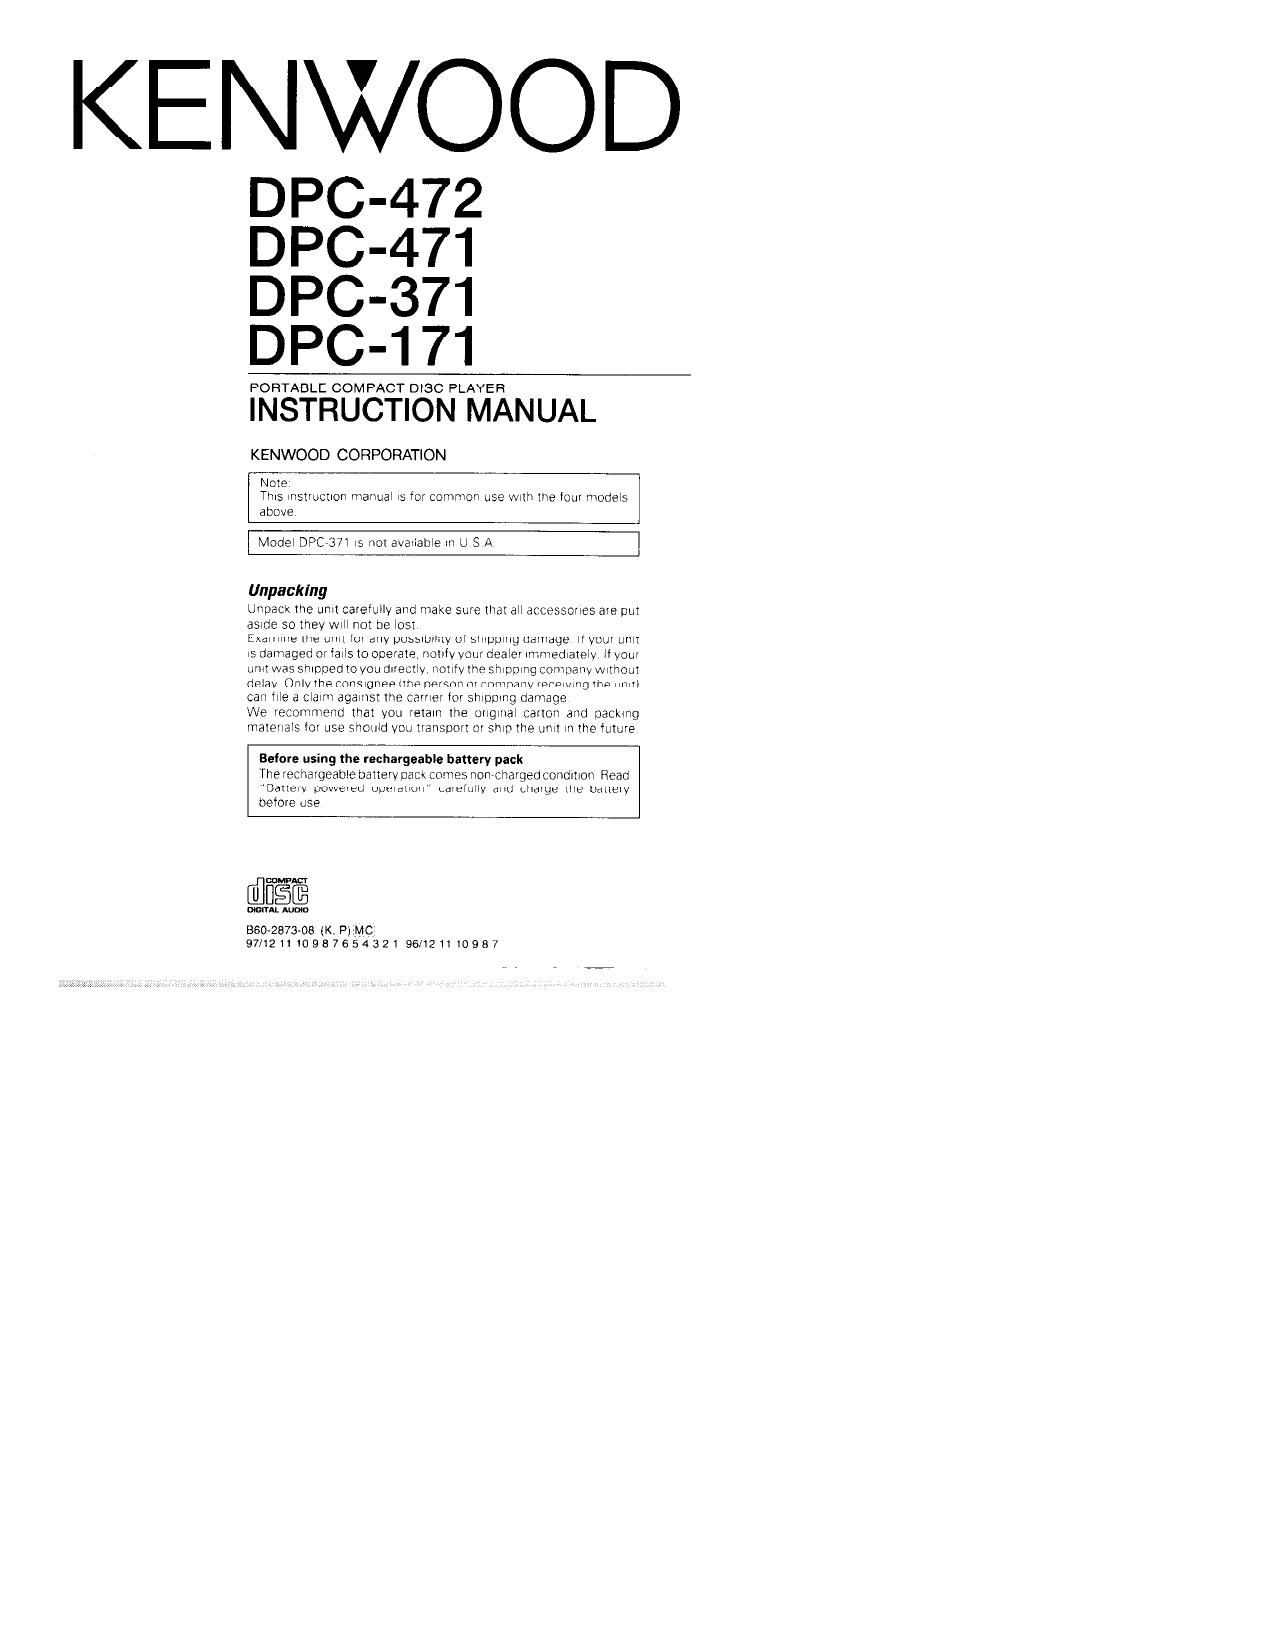 Kenwood DPC 471 Owners Manual